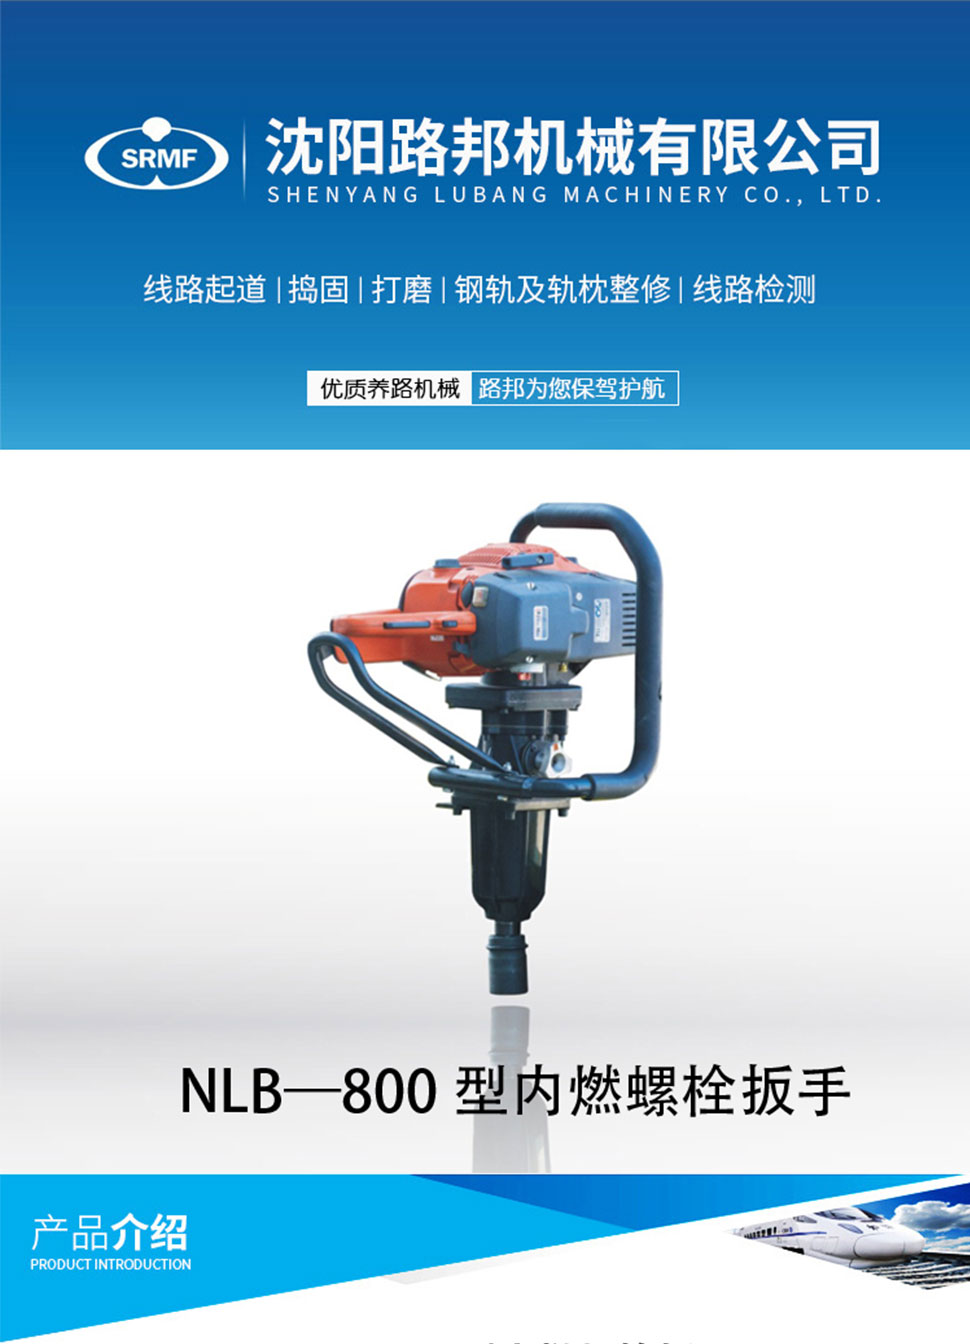 NLB-800型内燃螺栓扳手